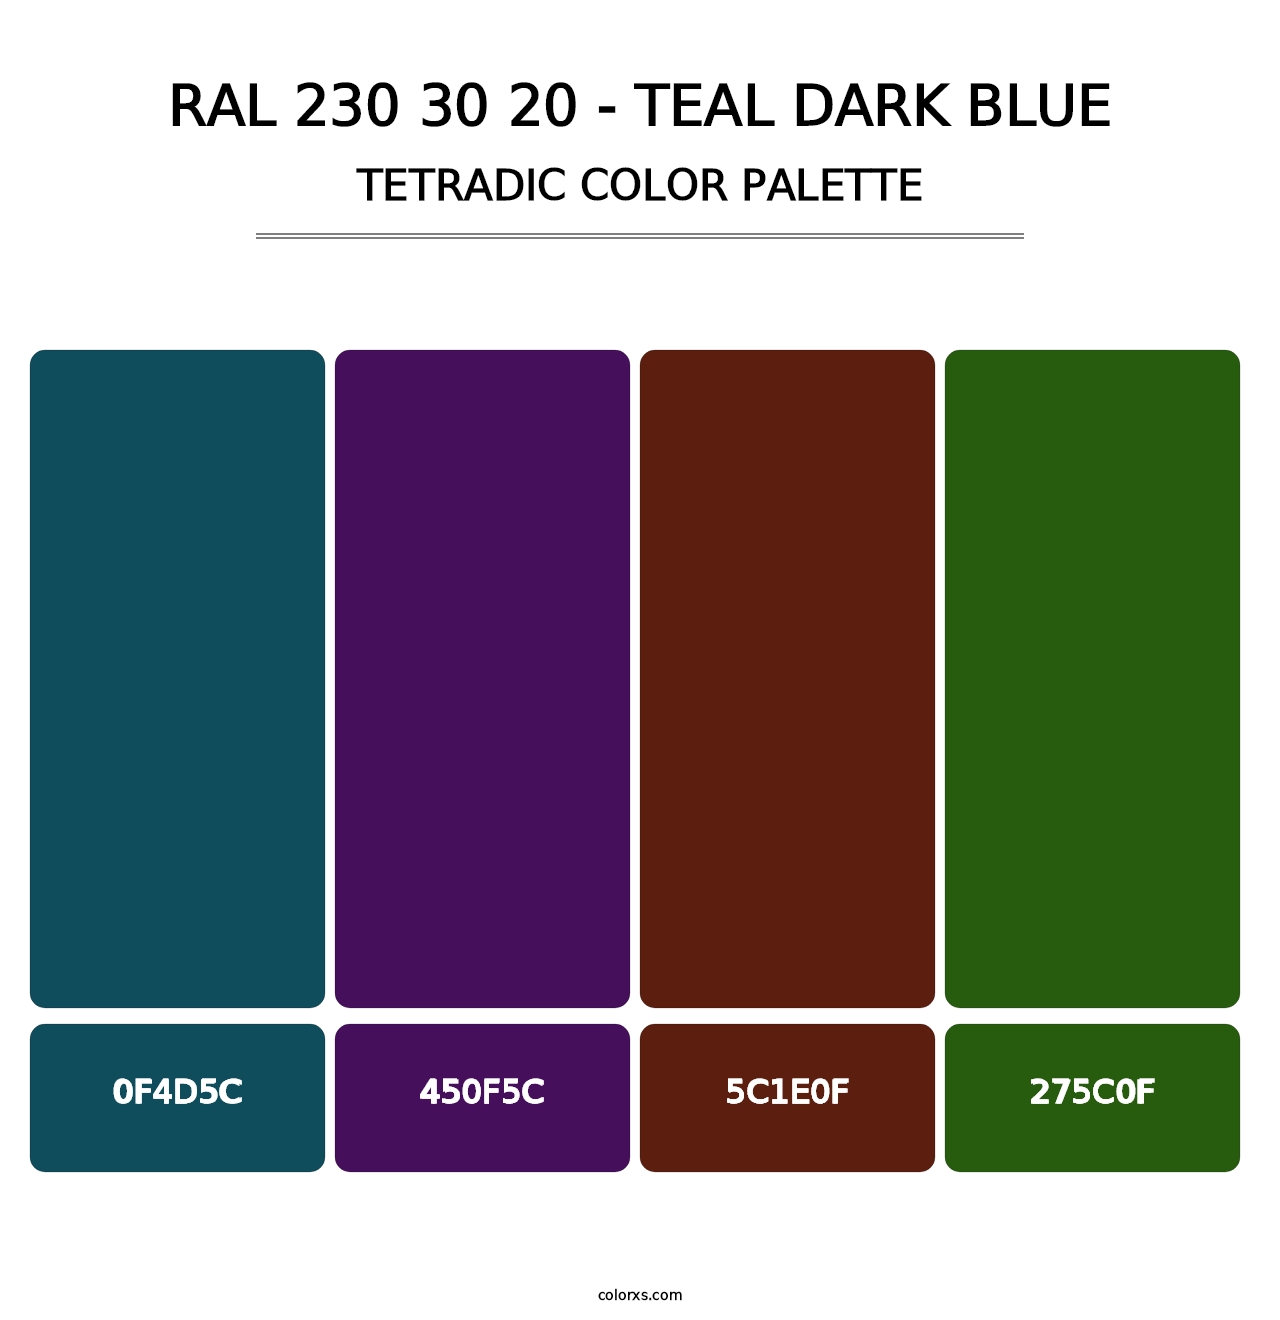 RAL 230 30 20 - Teal Dark Blue - Tetradic Color Palette